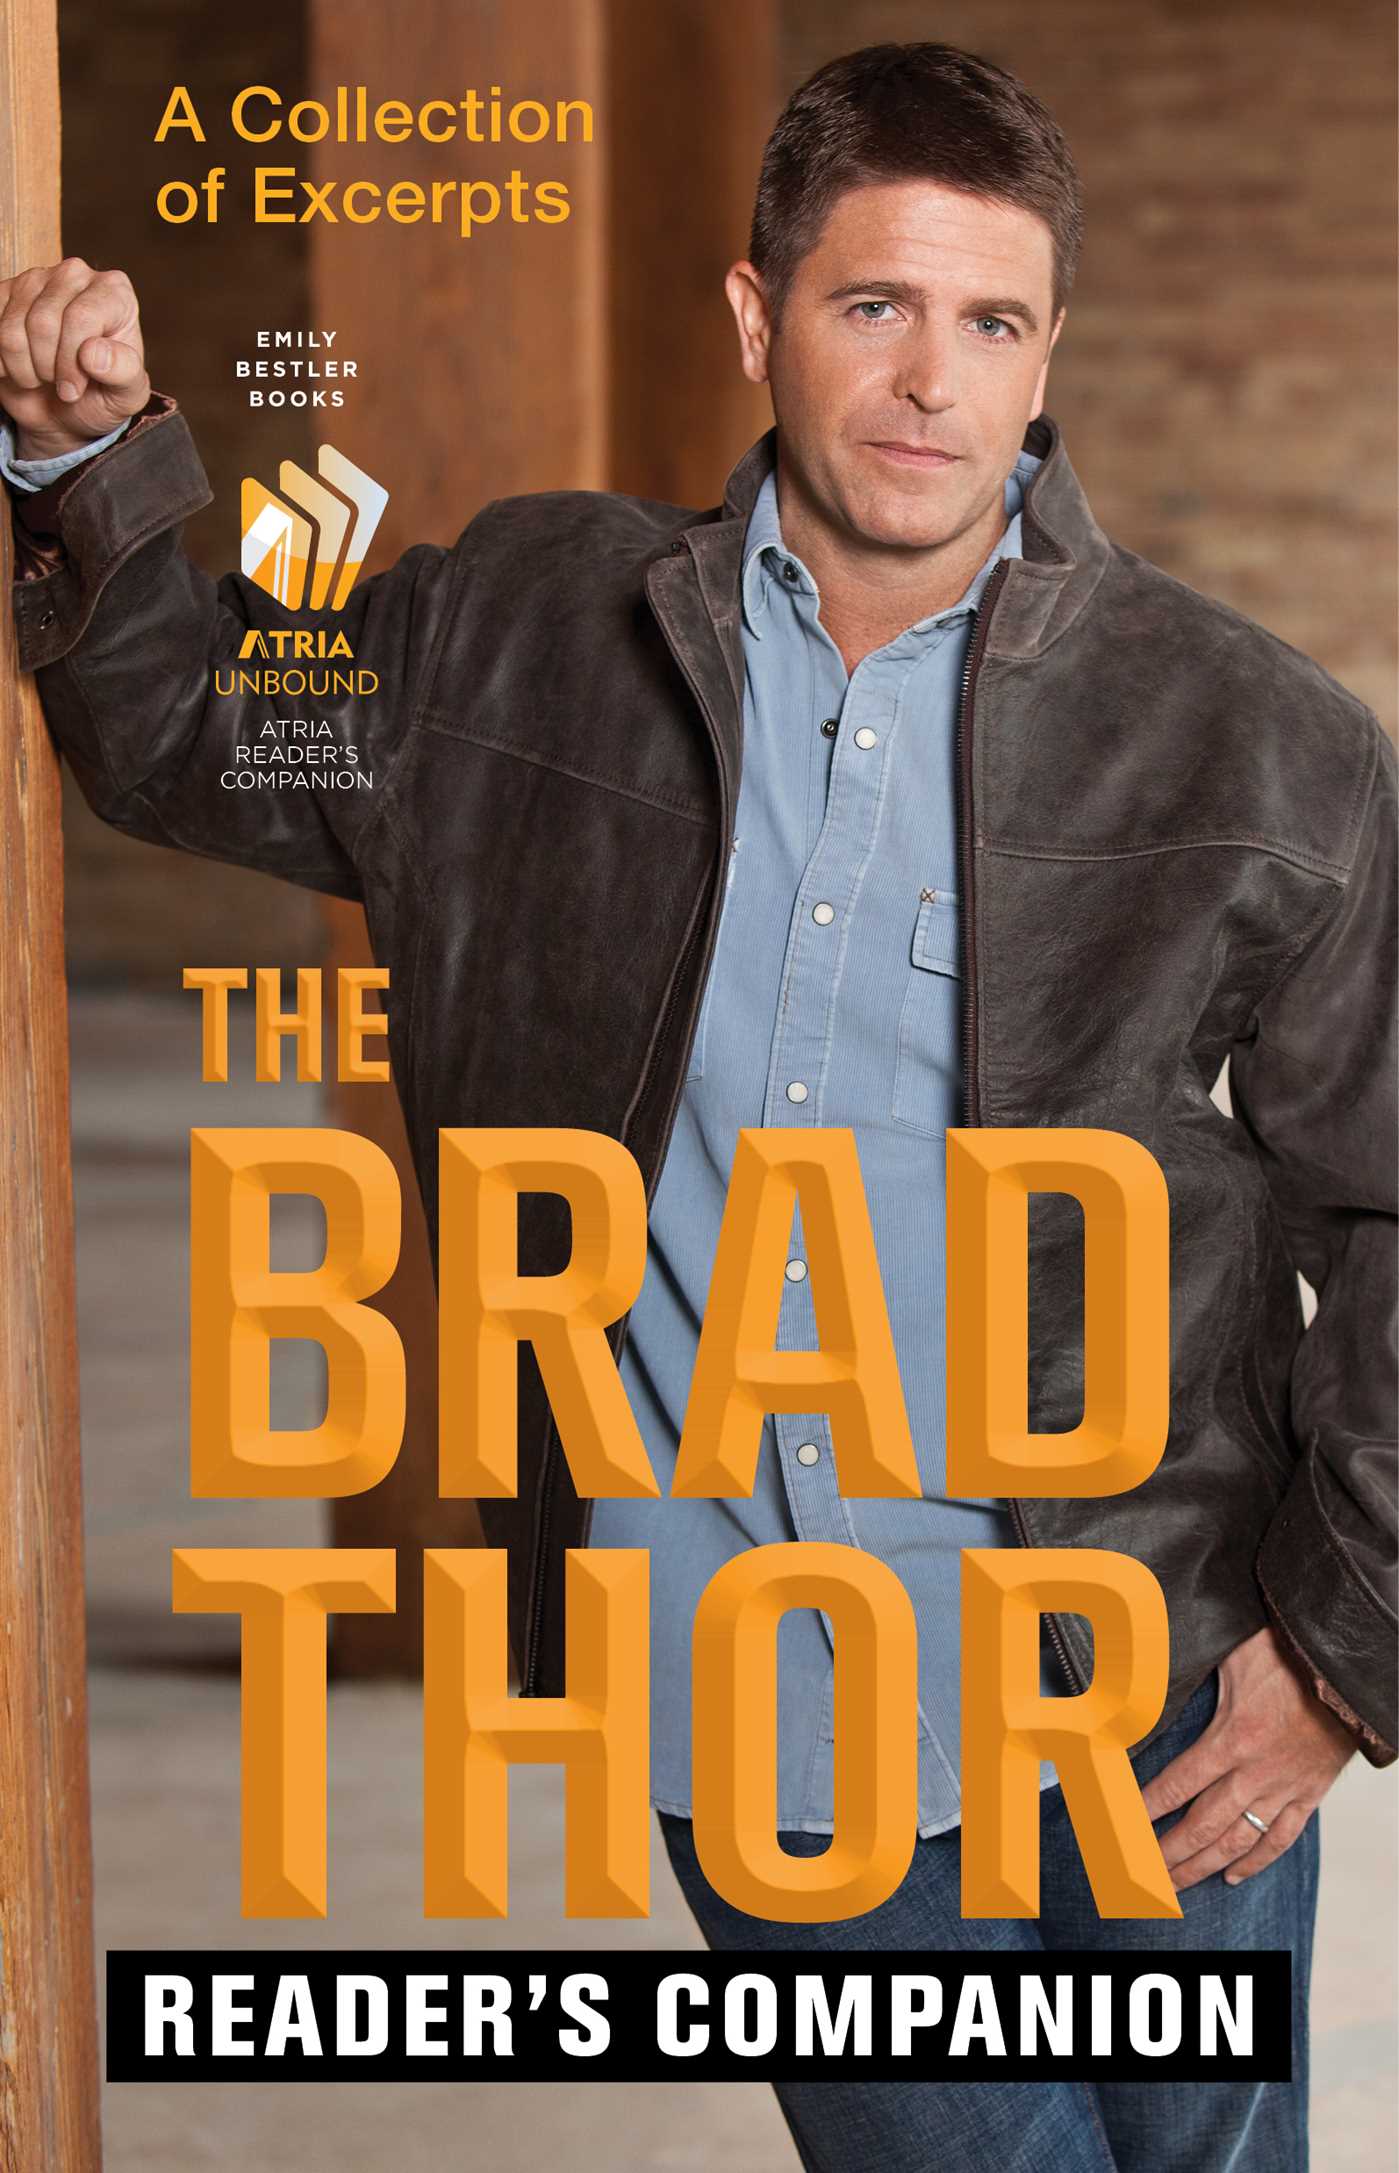 Brad Thor Reader's Companion